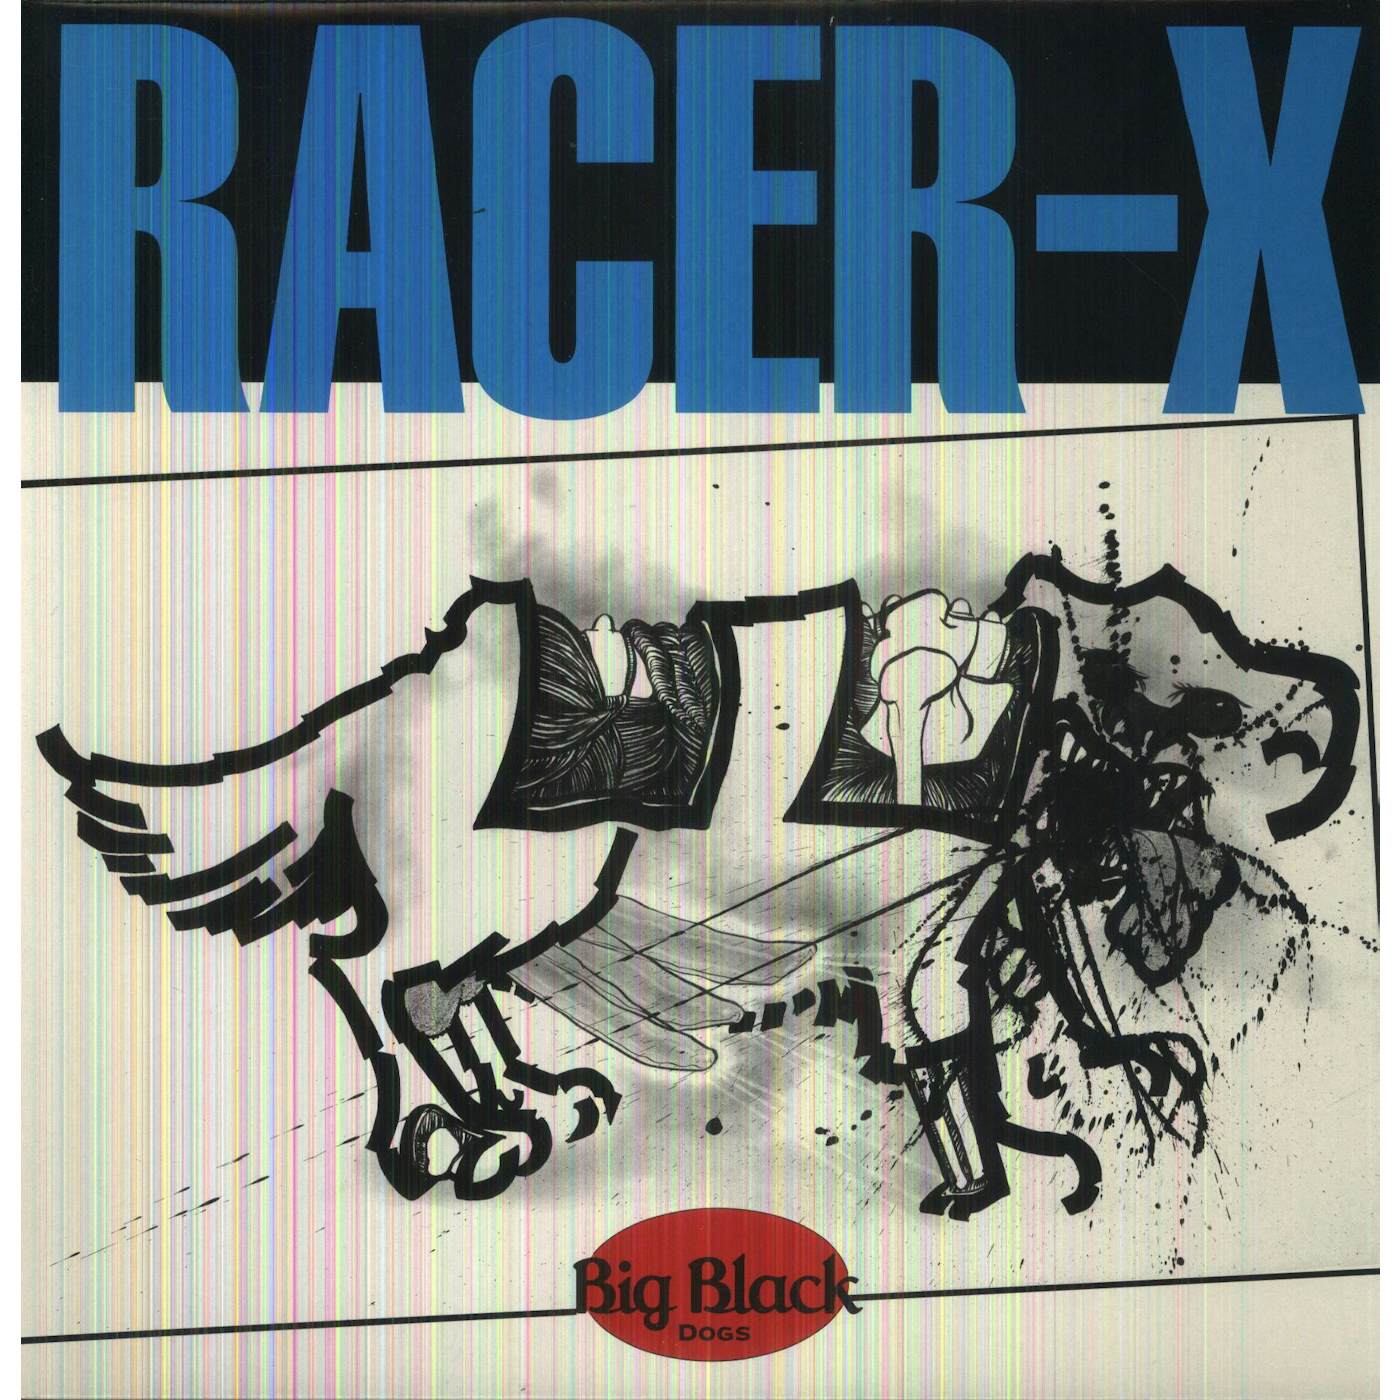 Big Black Racer-X Vinyl Record